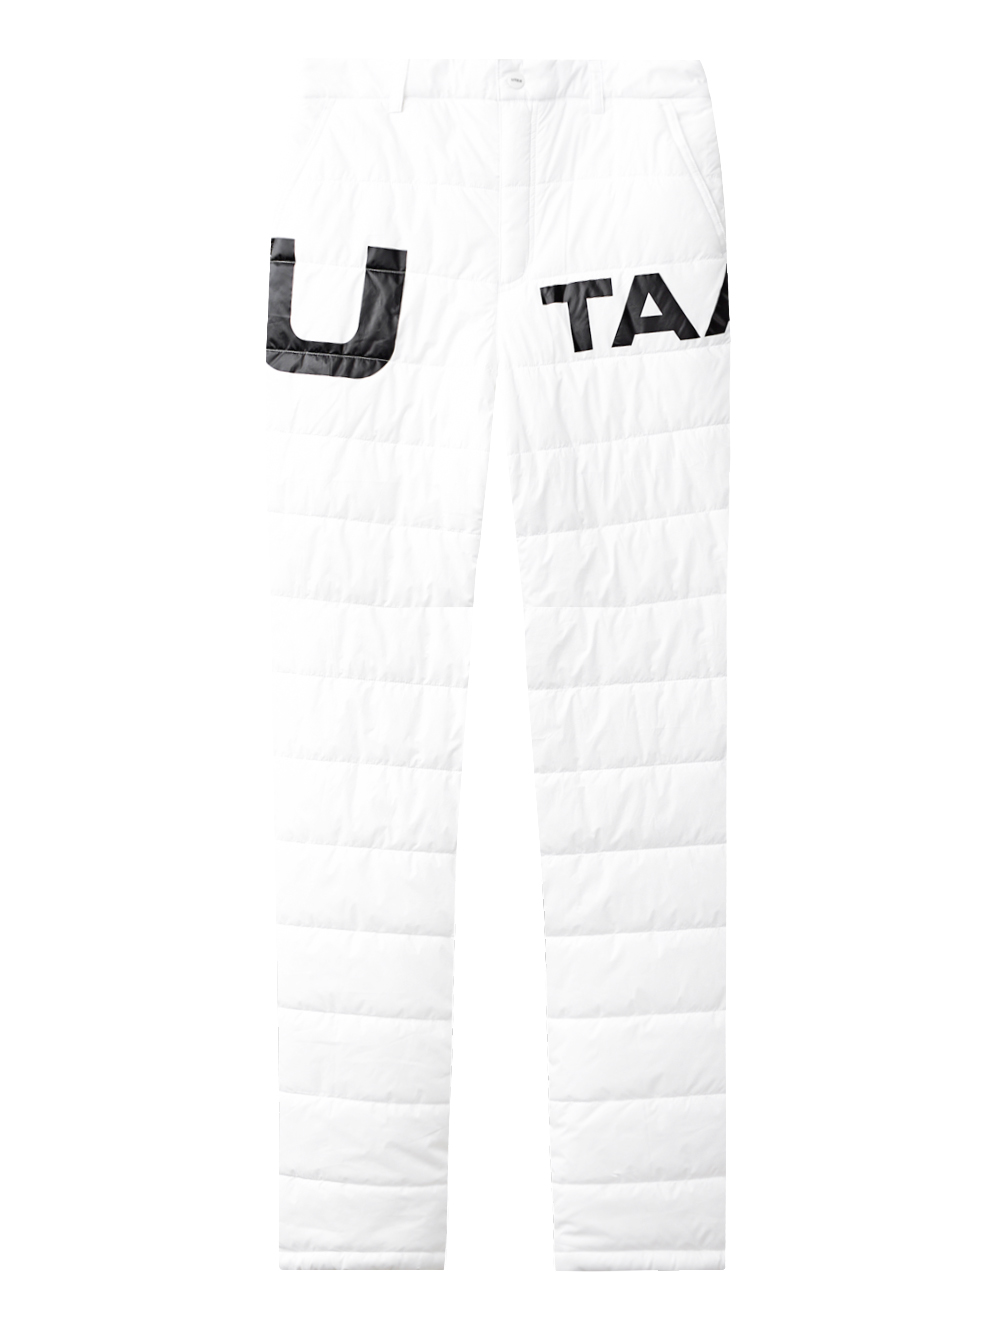 UTAA Slogan Padding Pants : Men&#039;s White(UC4PTM291WH)